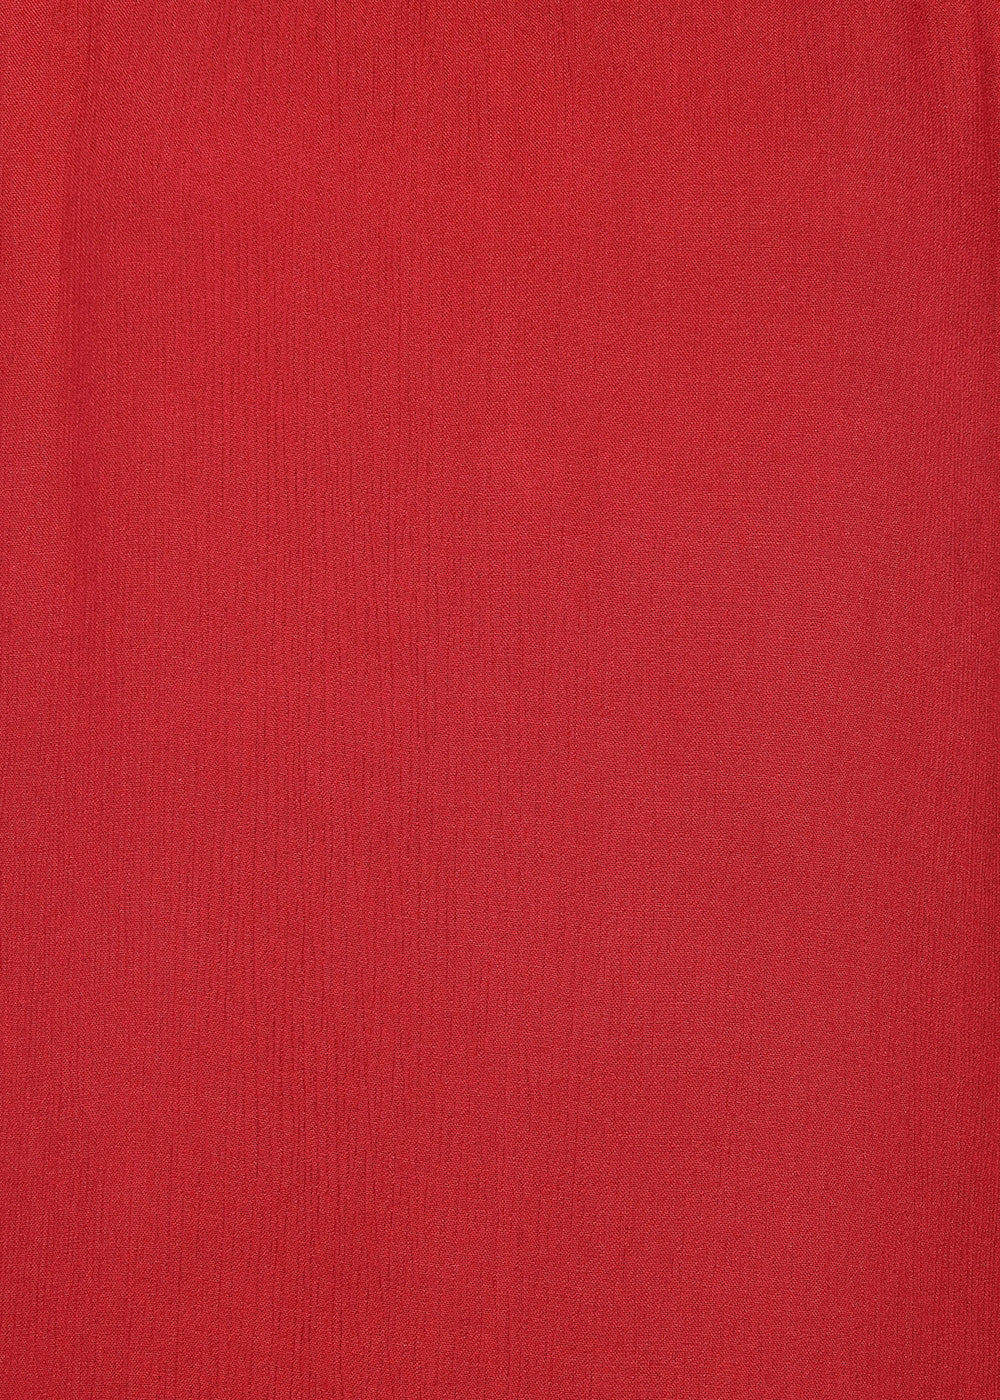 Maroon Red Choker Neck dress - GENZEE